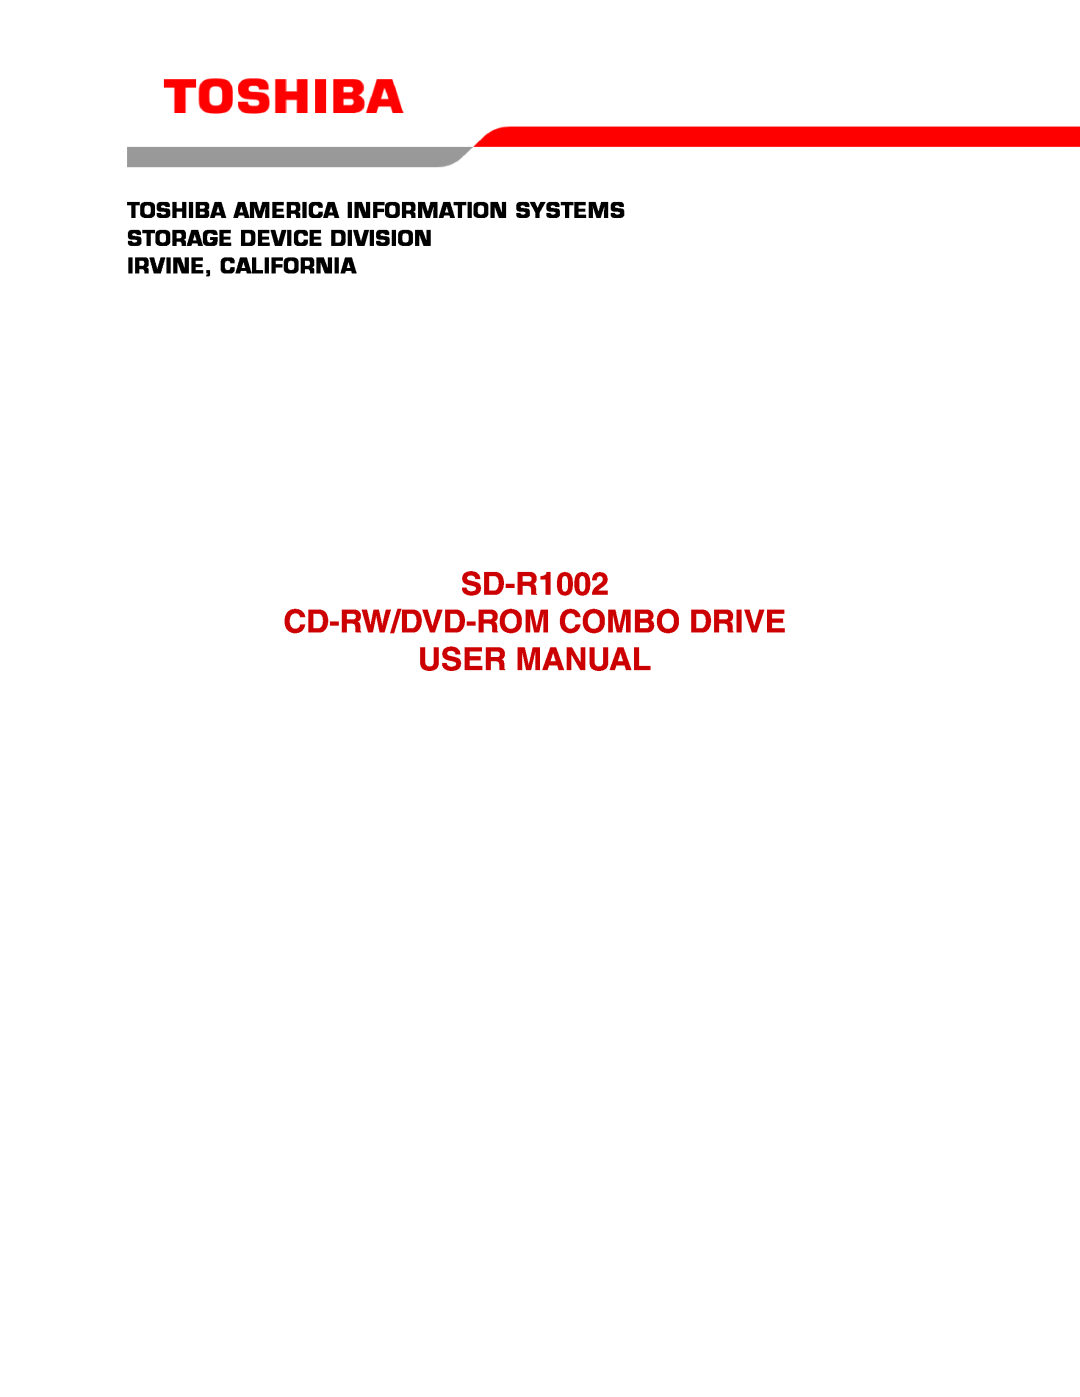 Toshiba user manual SD-R1002 CD-RW/DVD-ROM COMBO DRIVE USER MANUAL, Irvine, California 